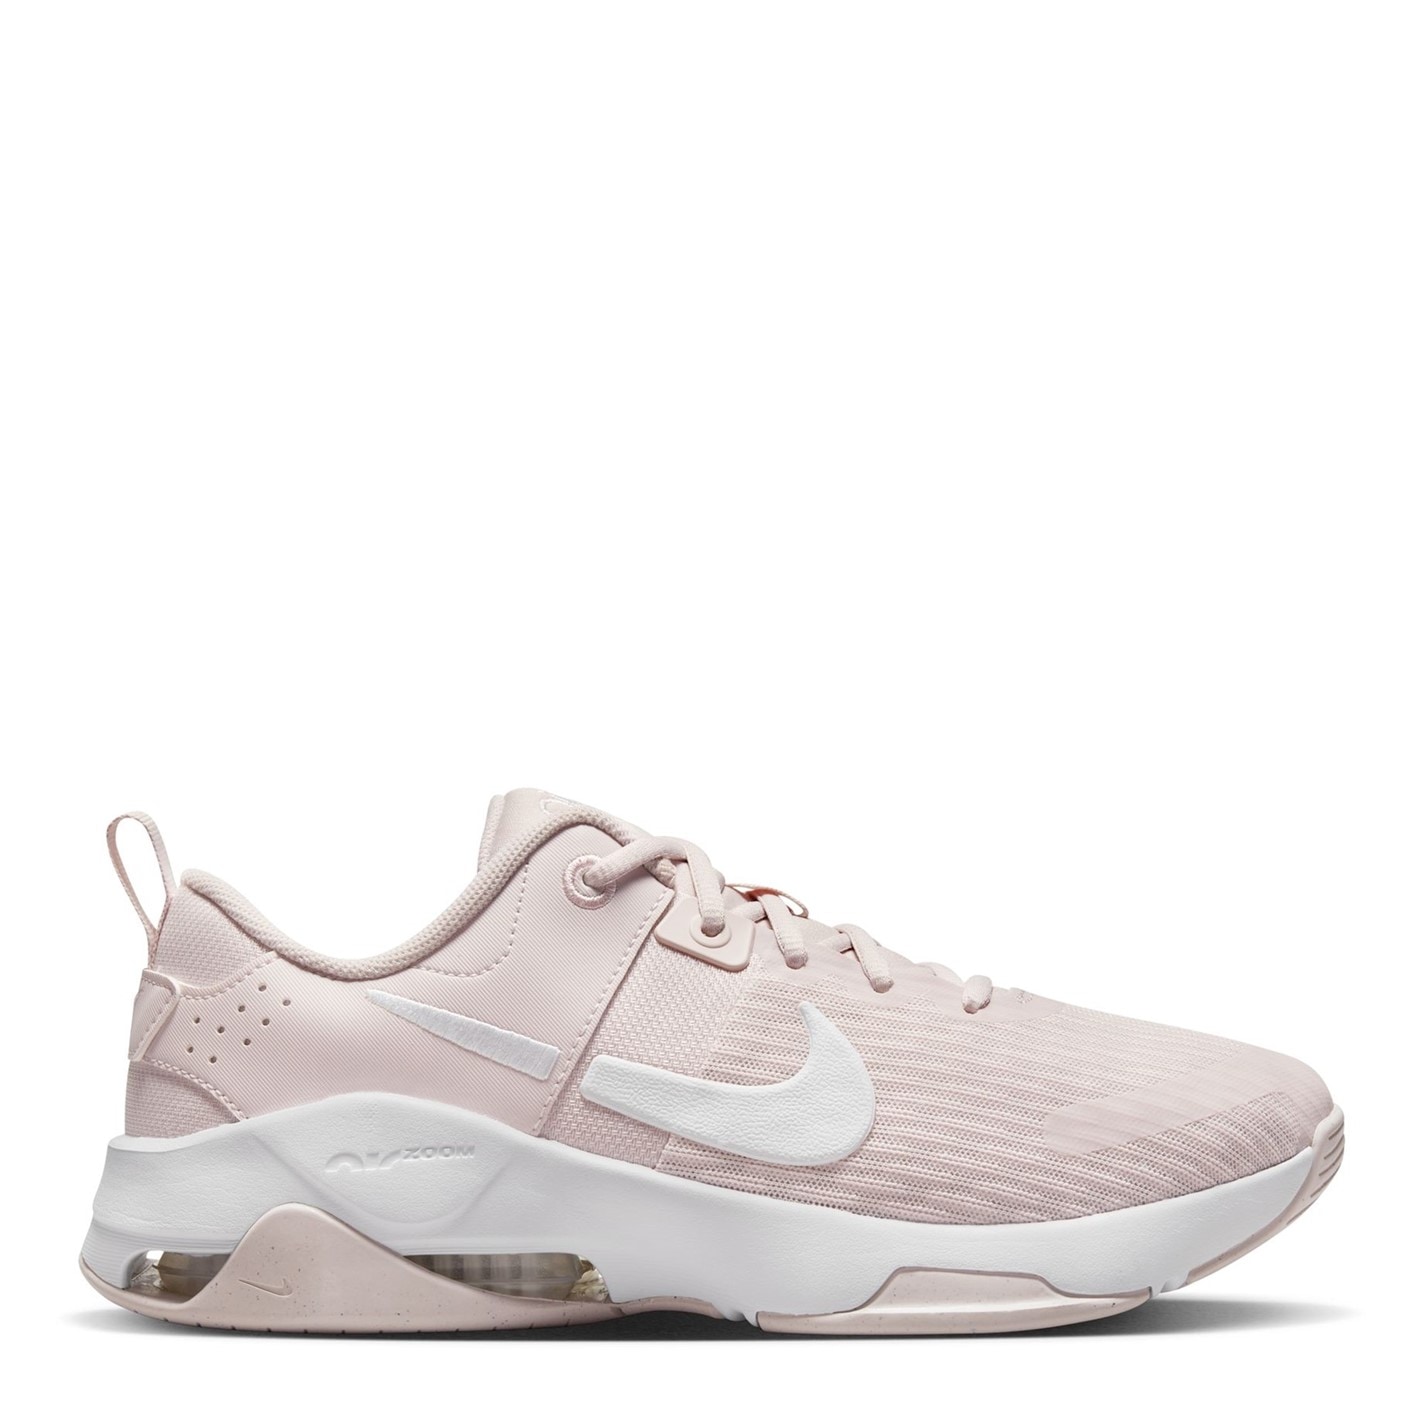 Adidasi sport Nike Zoom Bella 6 Premium pentru femei roz alb